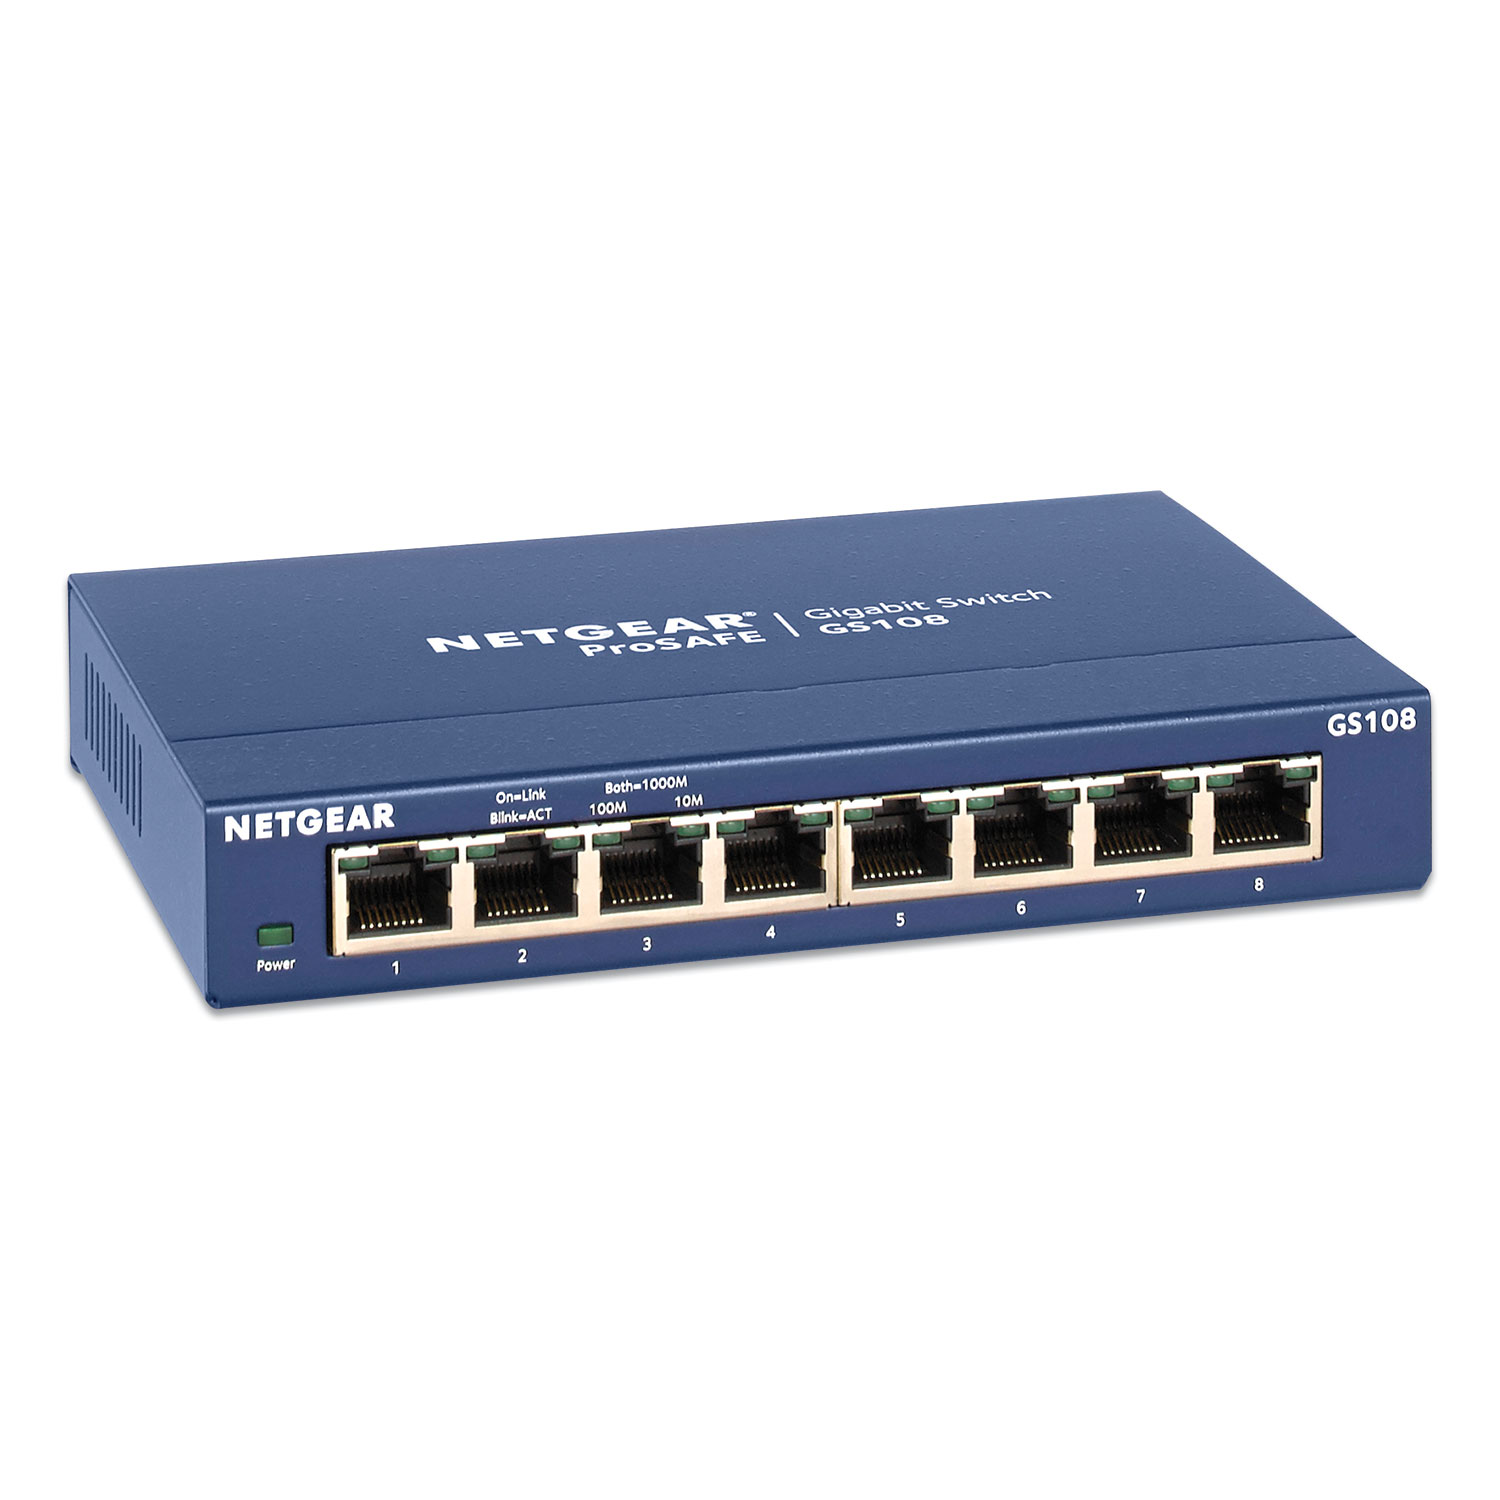  NETGEAR GS108-400NAS Unmanaged Gigabit Ethernet Switch, 16 Gbps Bandwidth, 192 KB Buffer, 8 Ports (NGR676705) 